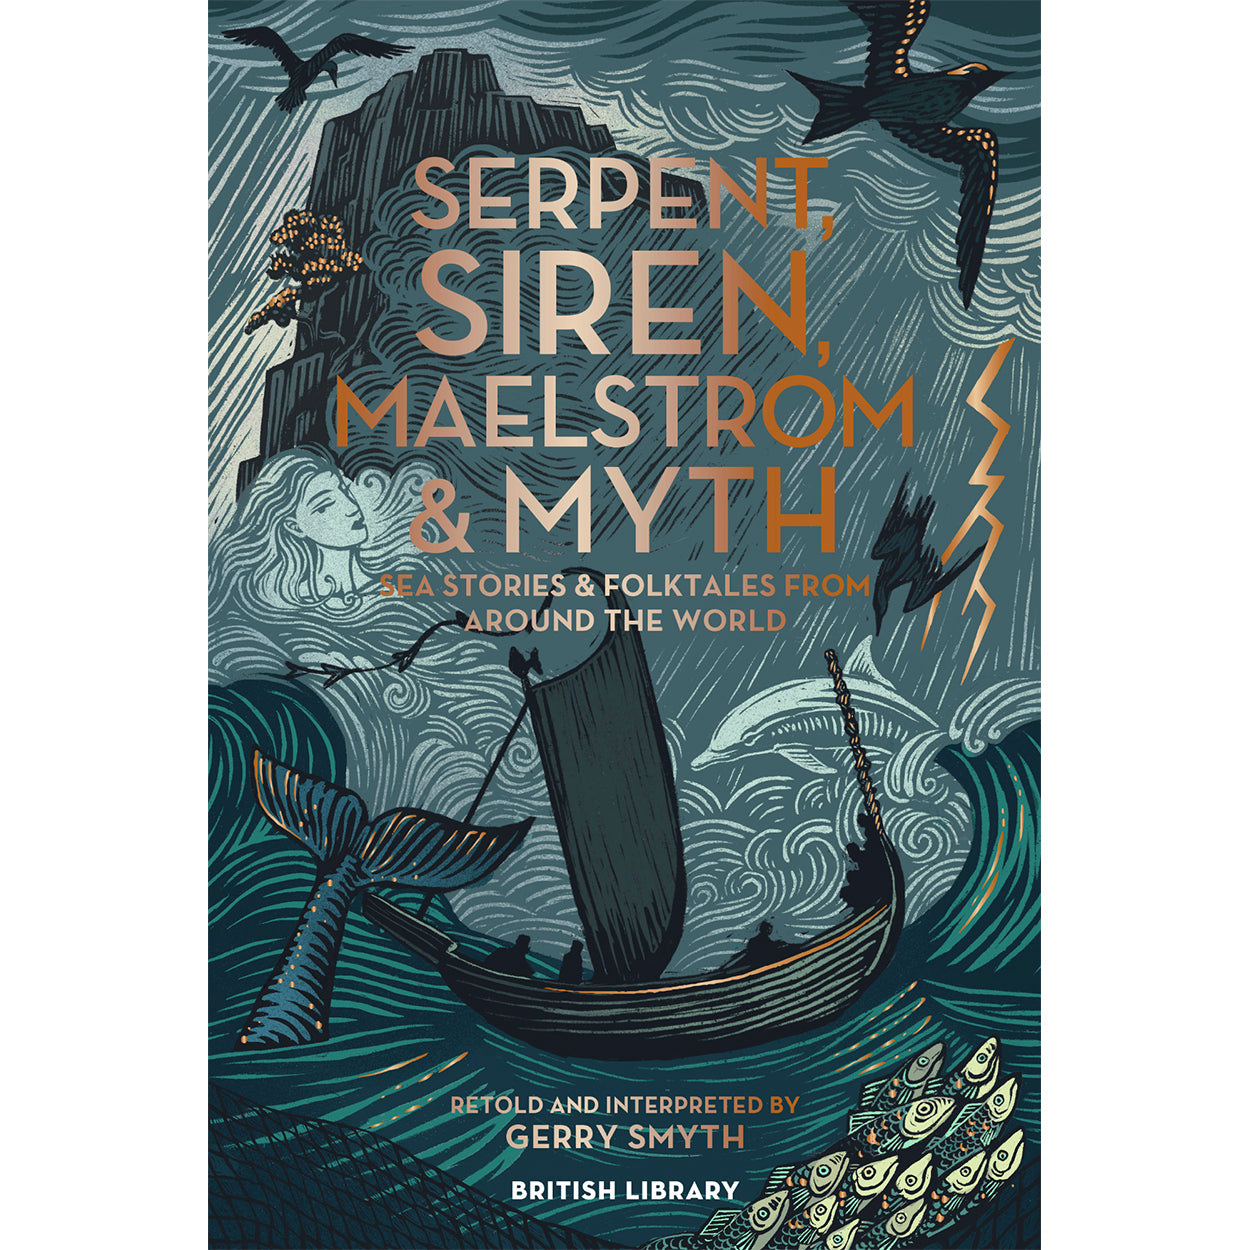 Serpent, Siren, Maelstrom & Myth front cover (Hardback)